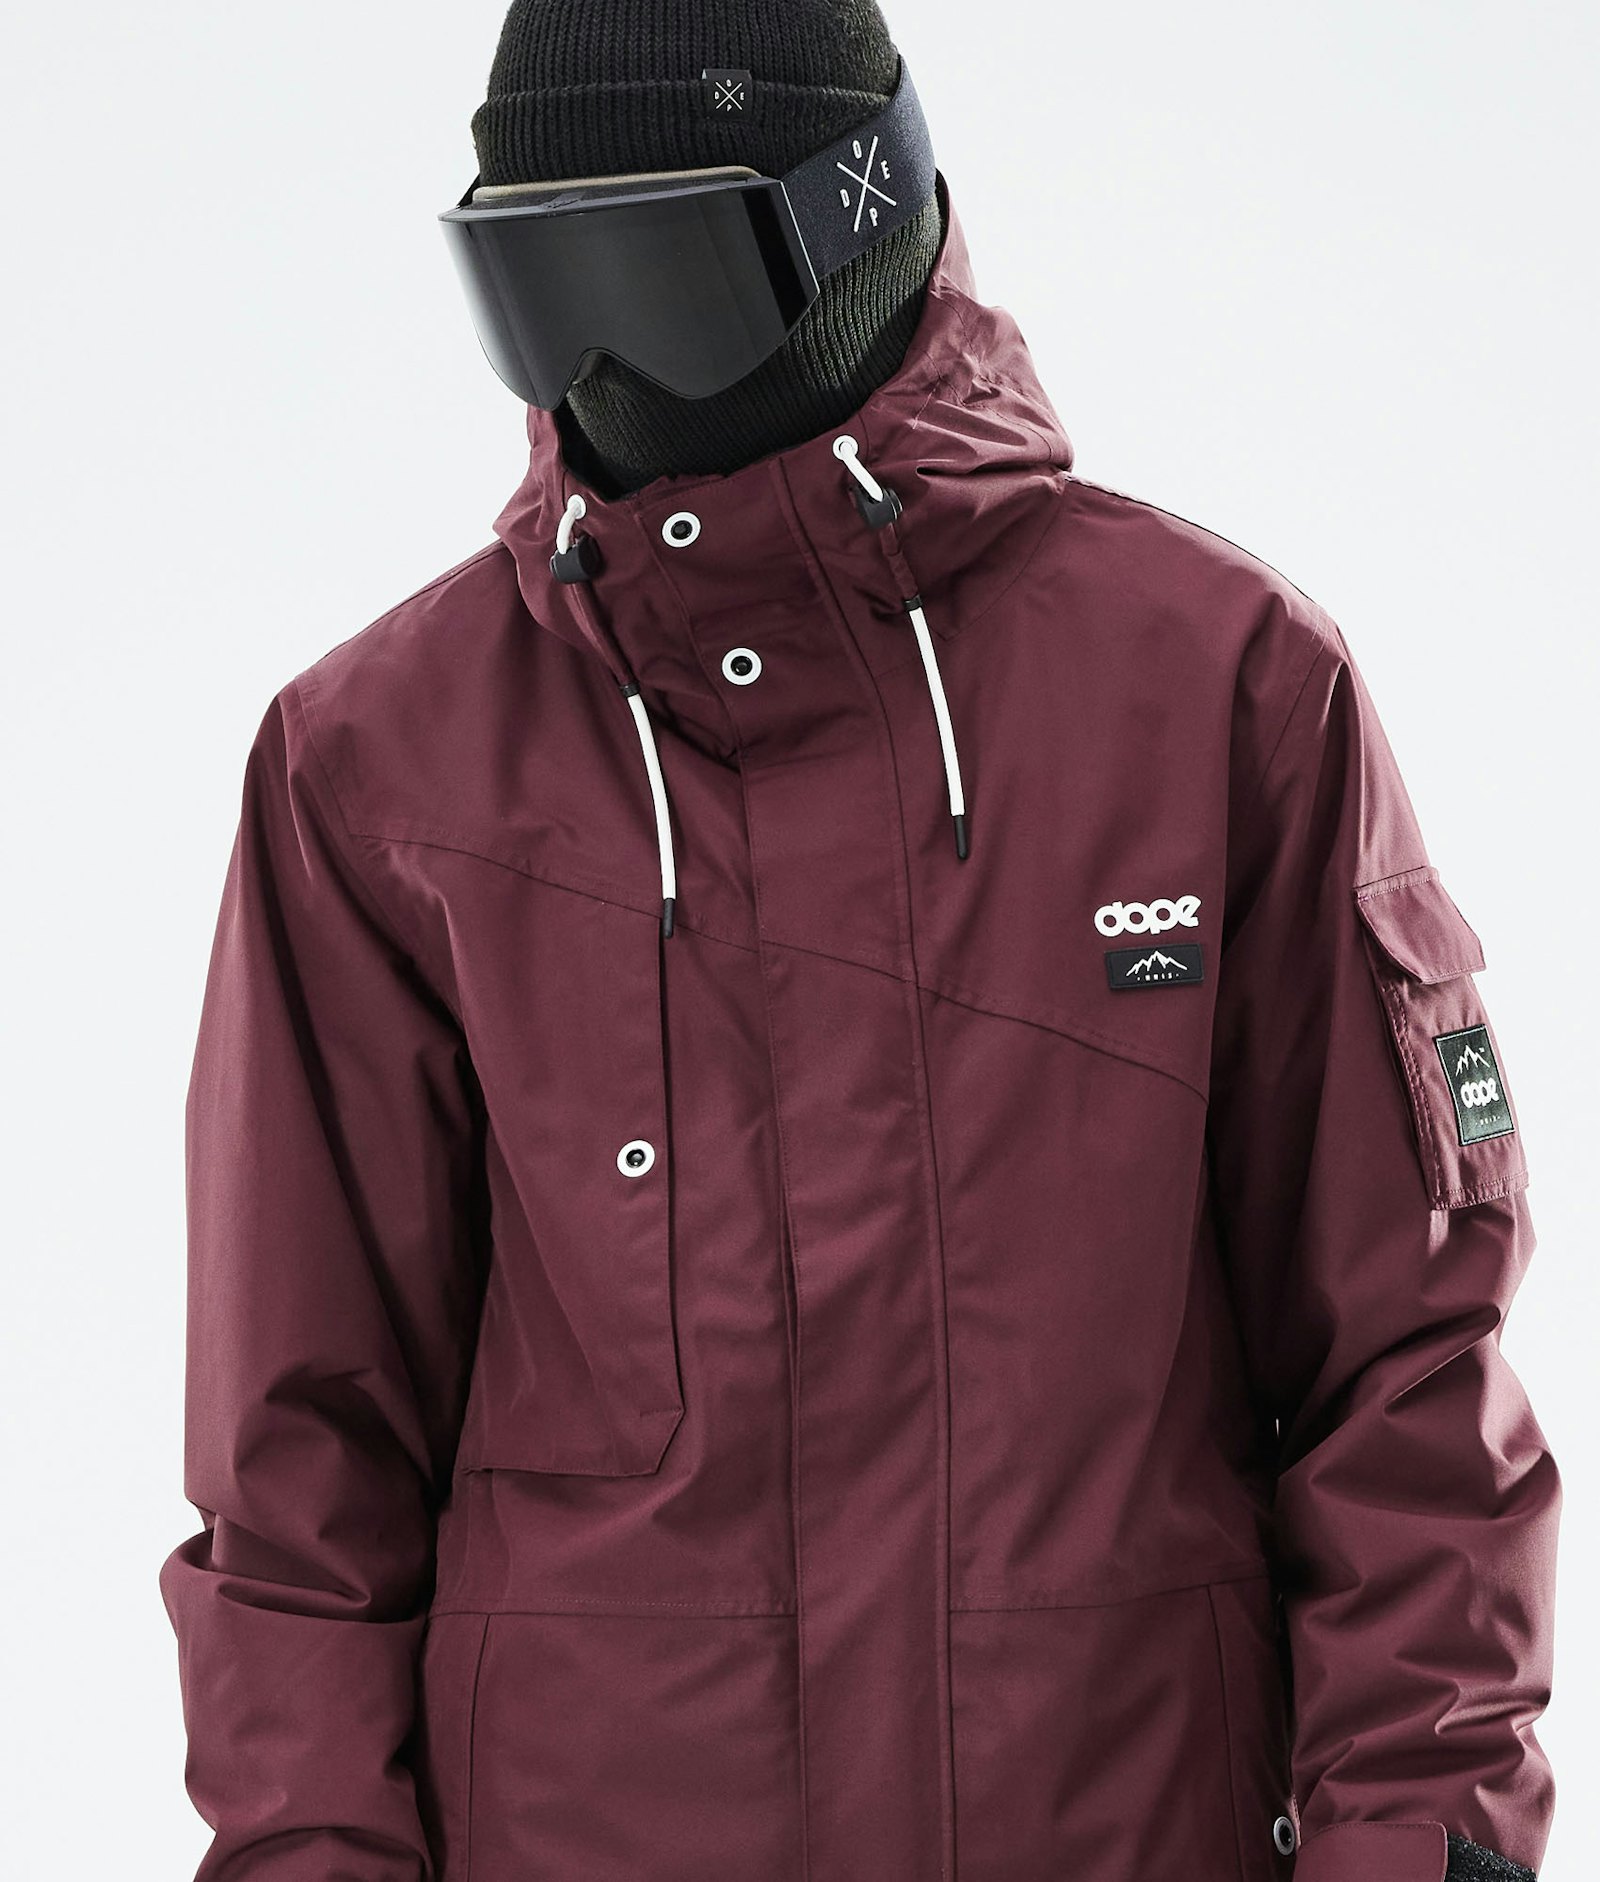 Dope Adept 2021 Snowboard Jacket Men Burgundy